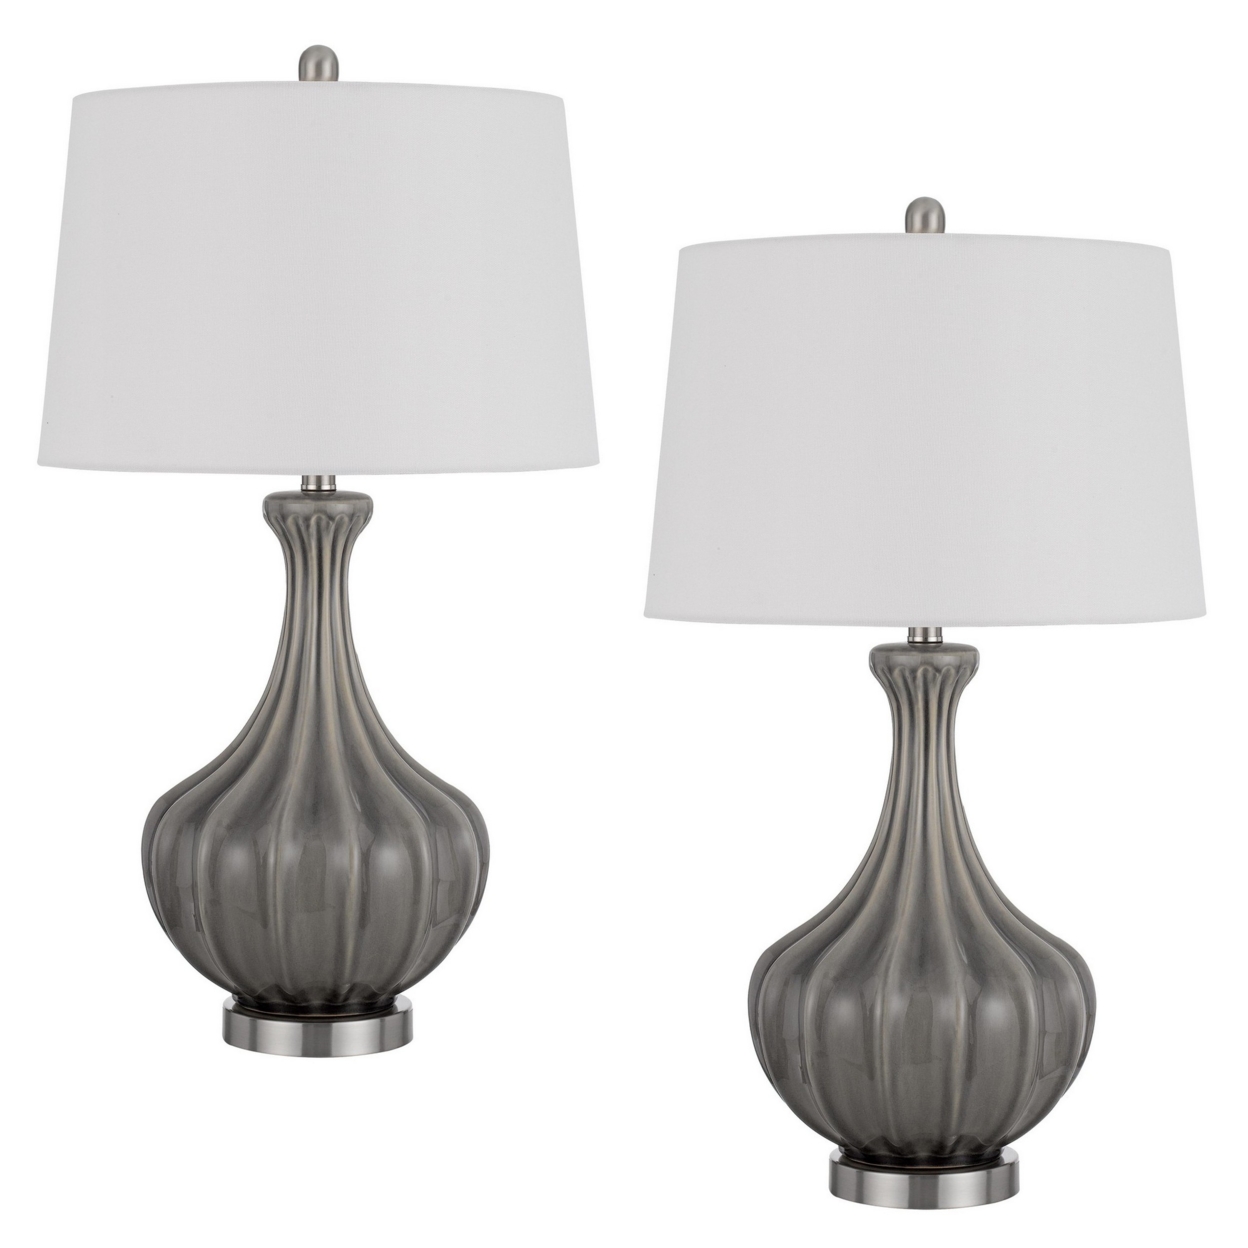 29 Inch Accent Table Lamp Set Of 2, Elegant Tapered Glass Base, Slate Gray- Saltoro Sherpi